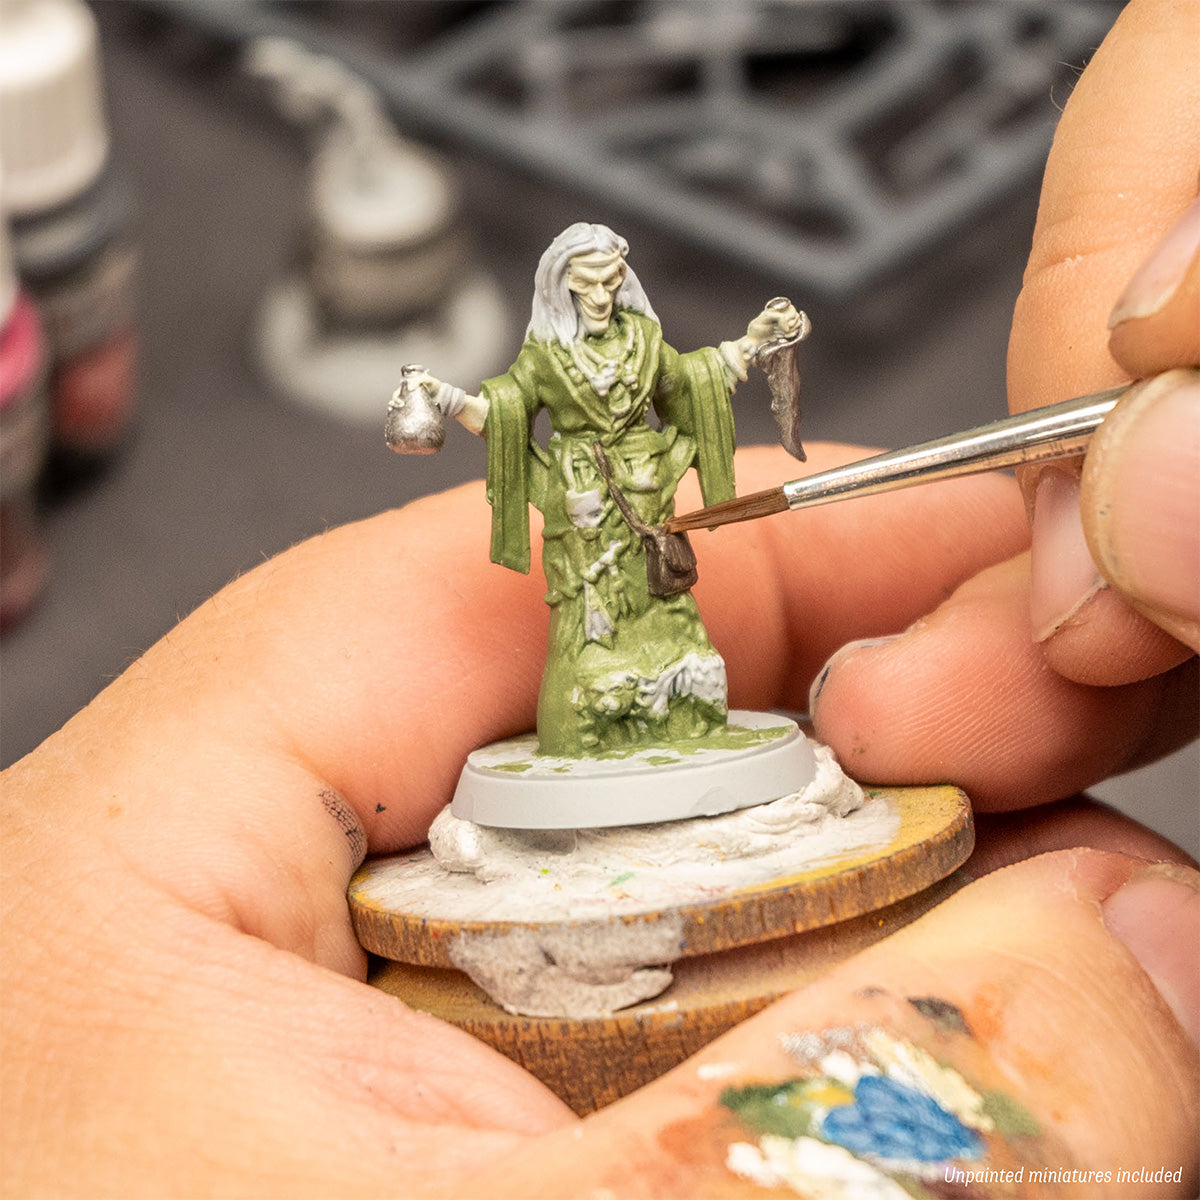 Army Painter Gamemaster Character Paint Set + Free Item - Miniature  Painting Kit